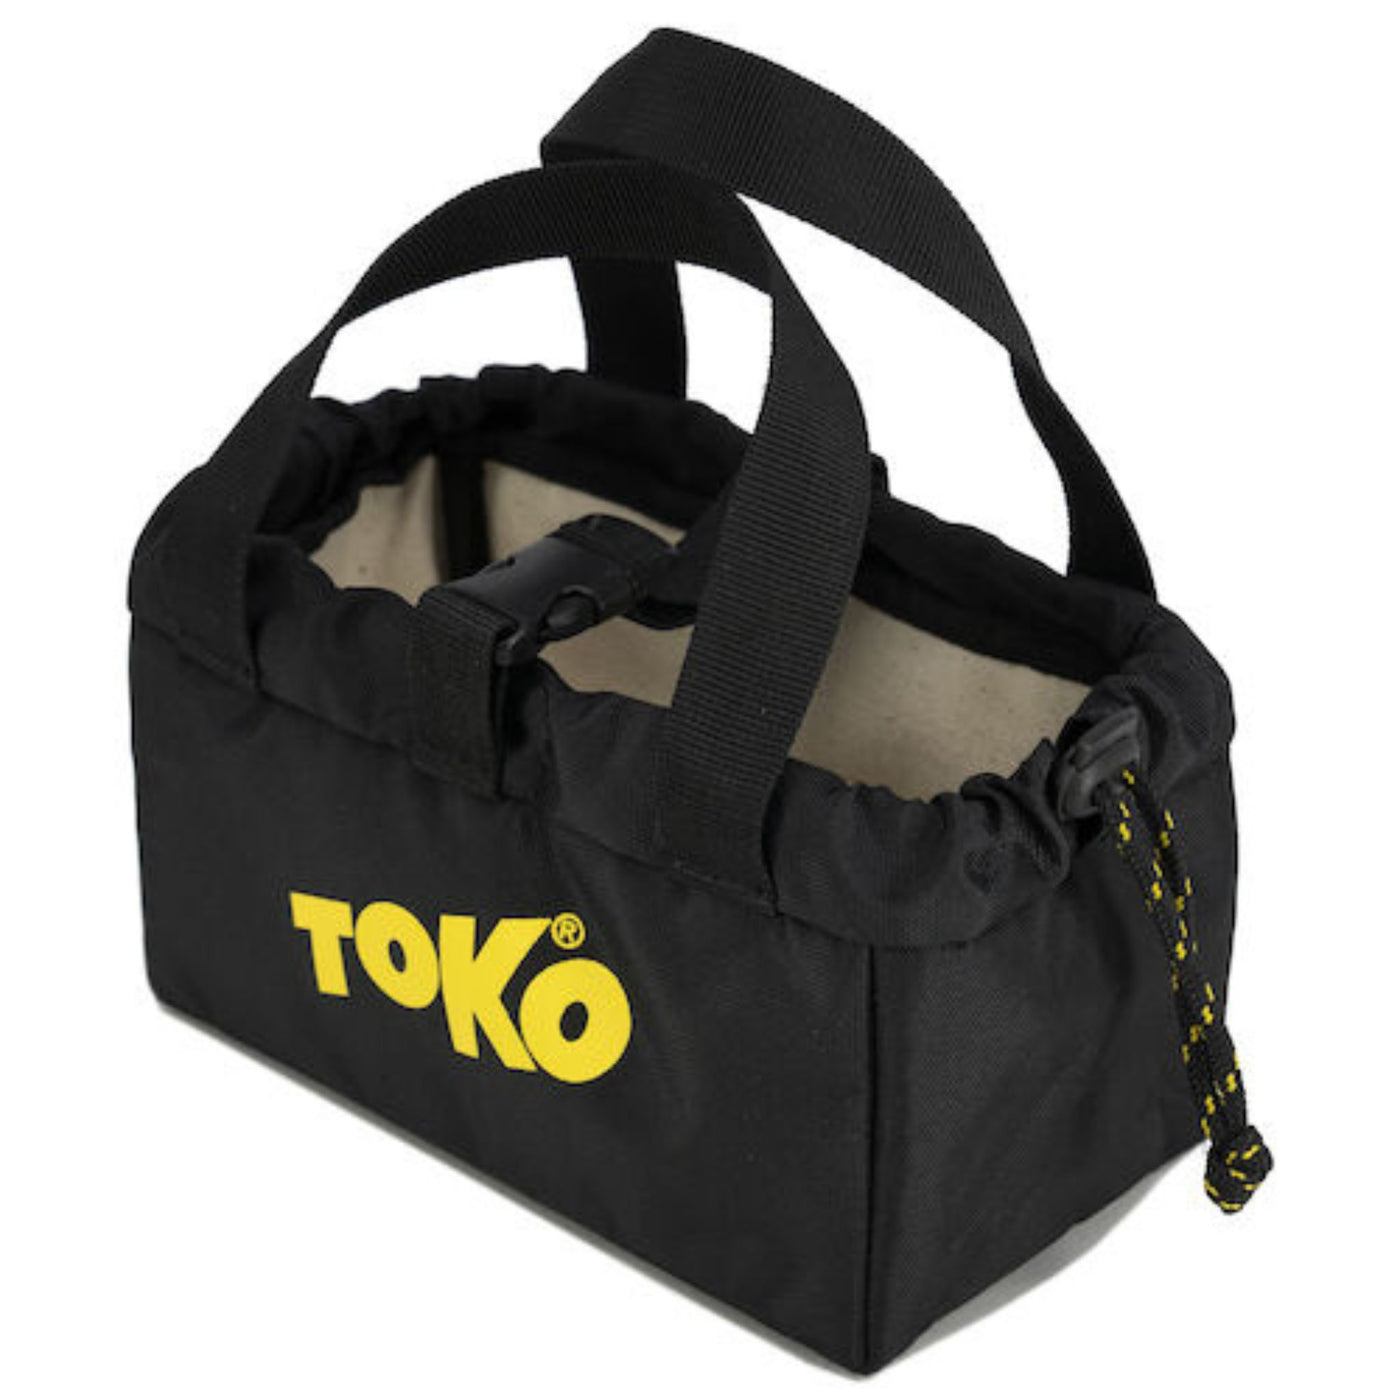 Toko Iron Bag TUNING EQUIPMENT Toko   